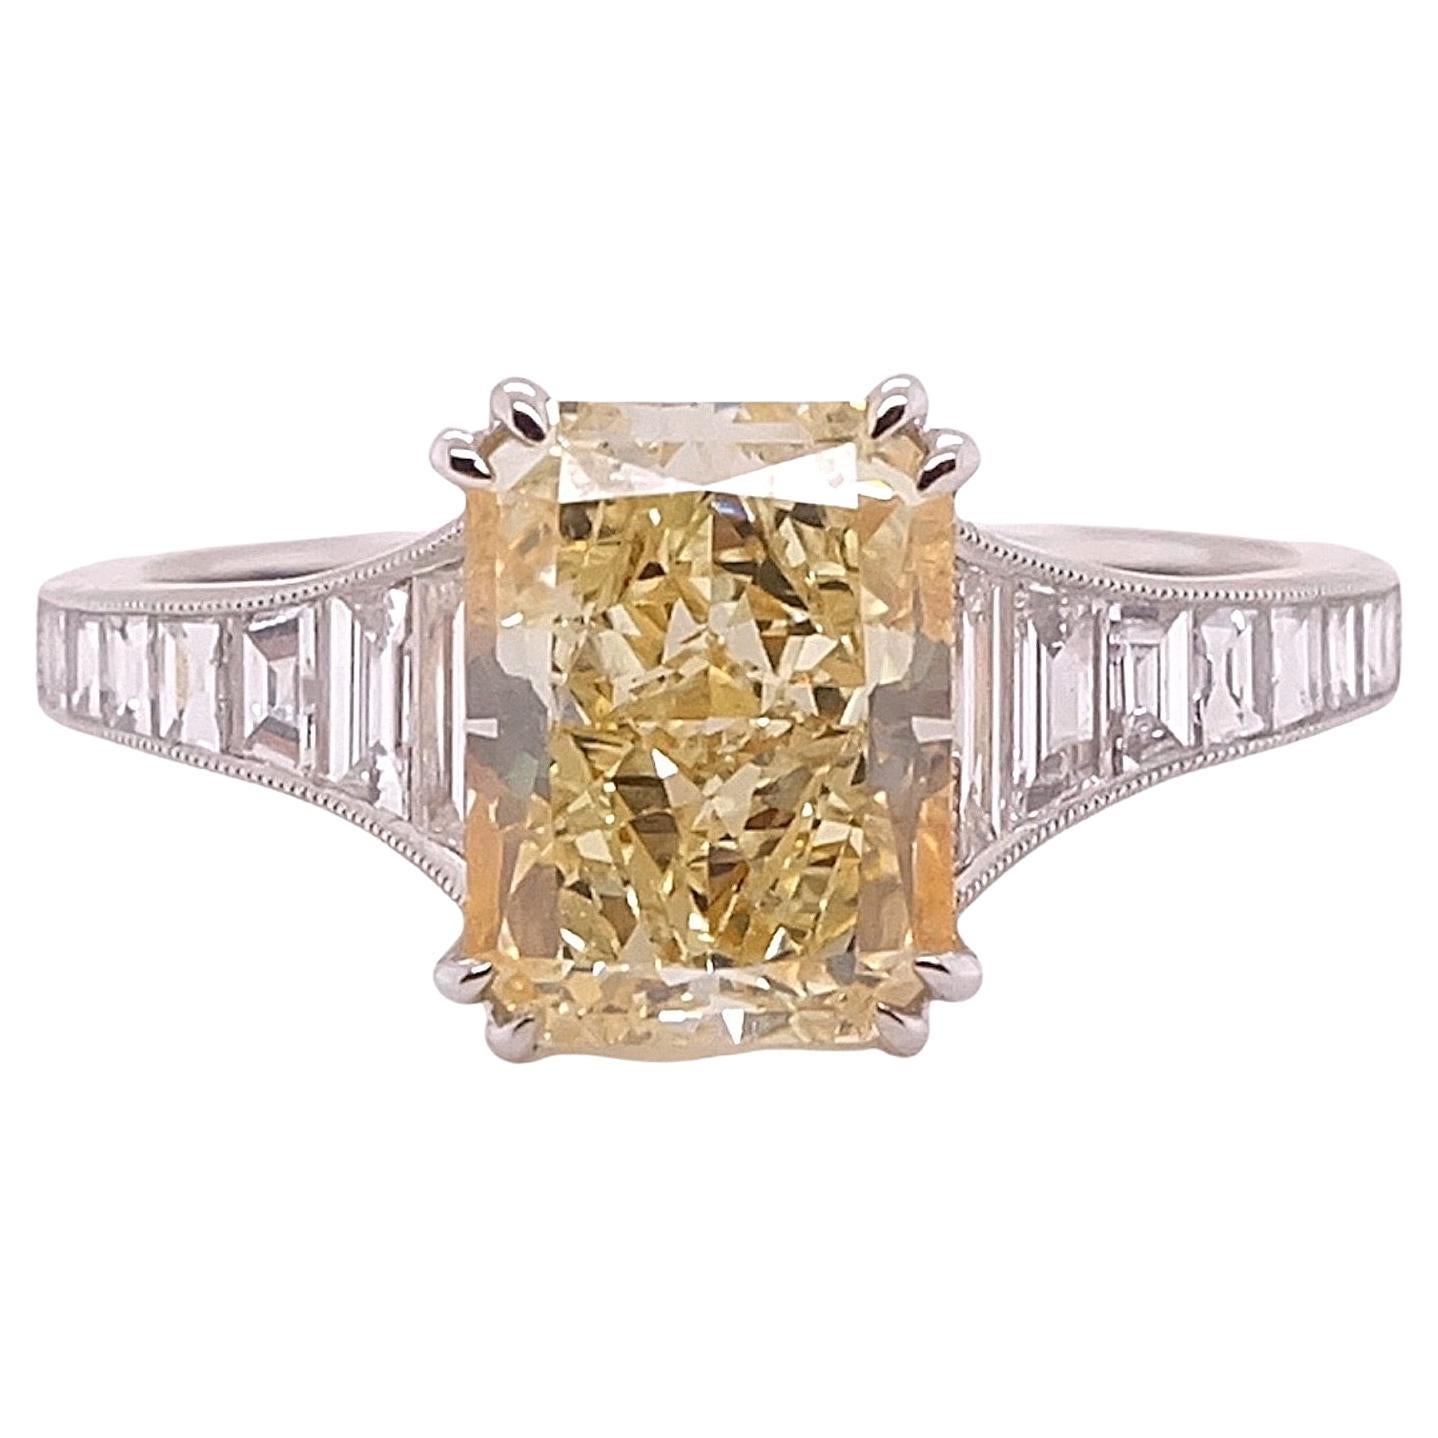 Sophia D. 2.50 Carat Fancy Light Yellow Diamond Ring Set in Platinum